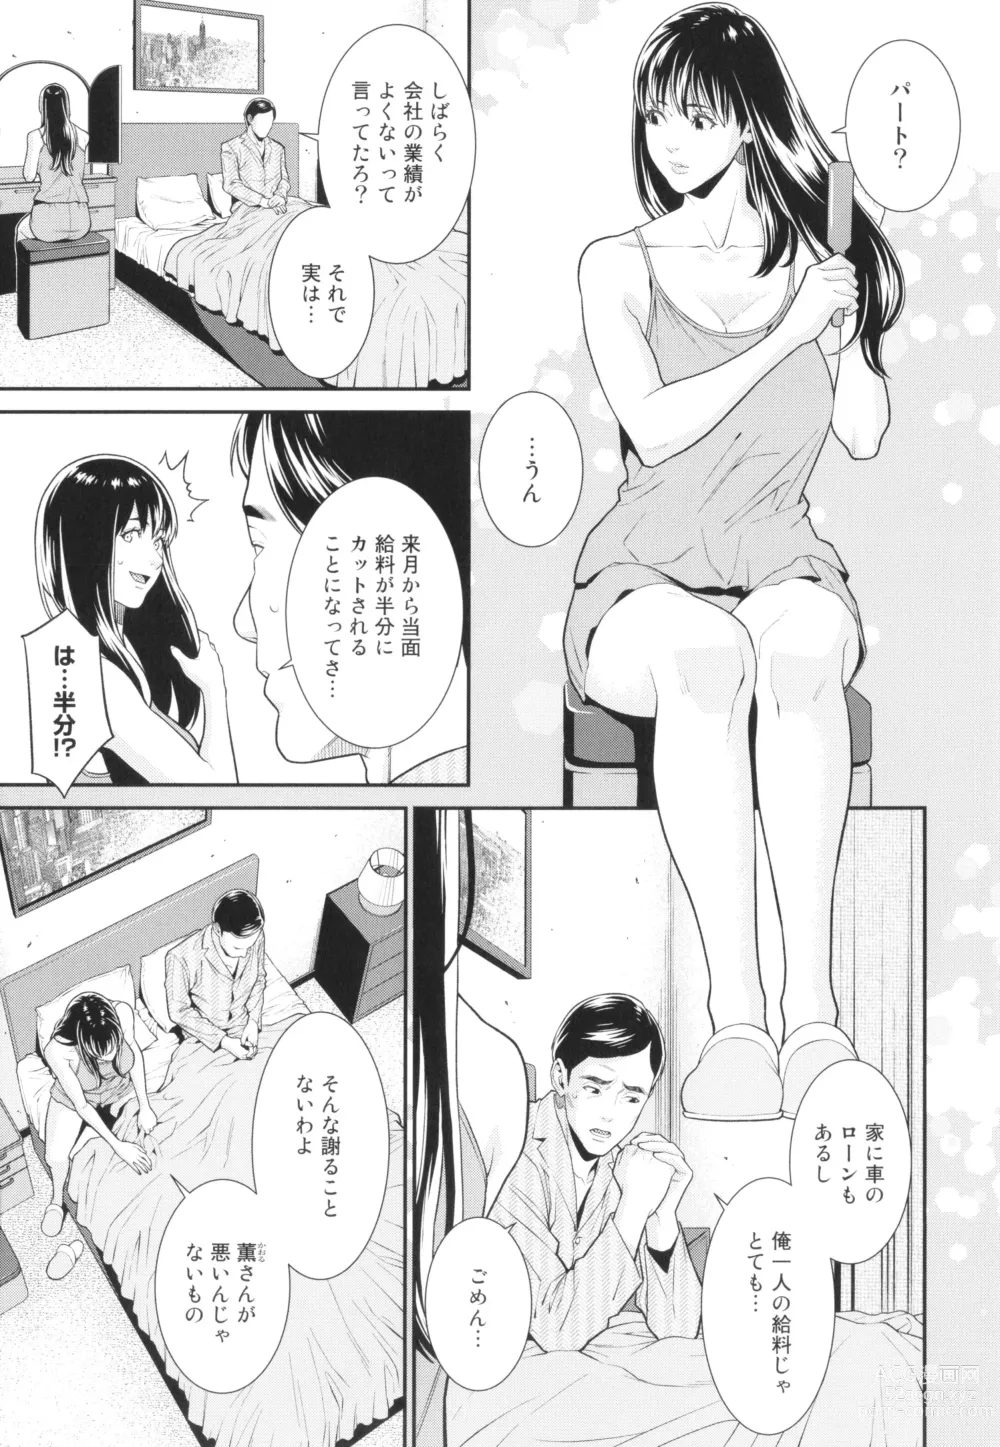 Page 8 of manga Onna ni Kagi wa Kakerarenai